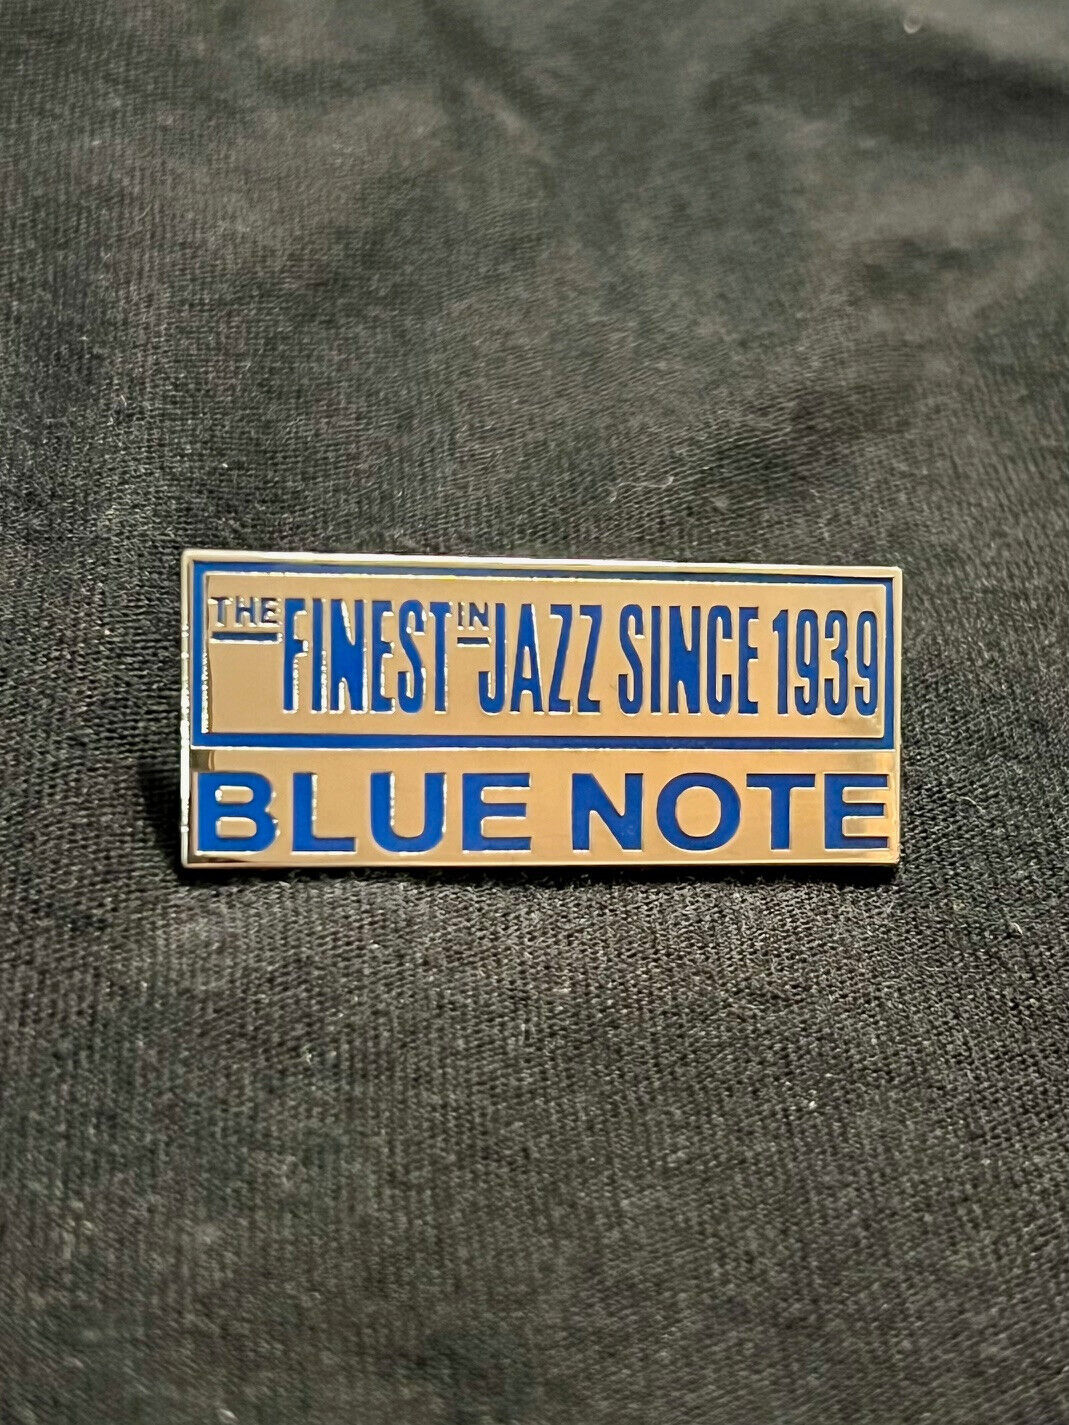 Blue Note Enamel Pin - Jazz record label - Miles Davis Lee Morgan Stan Getz